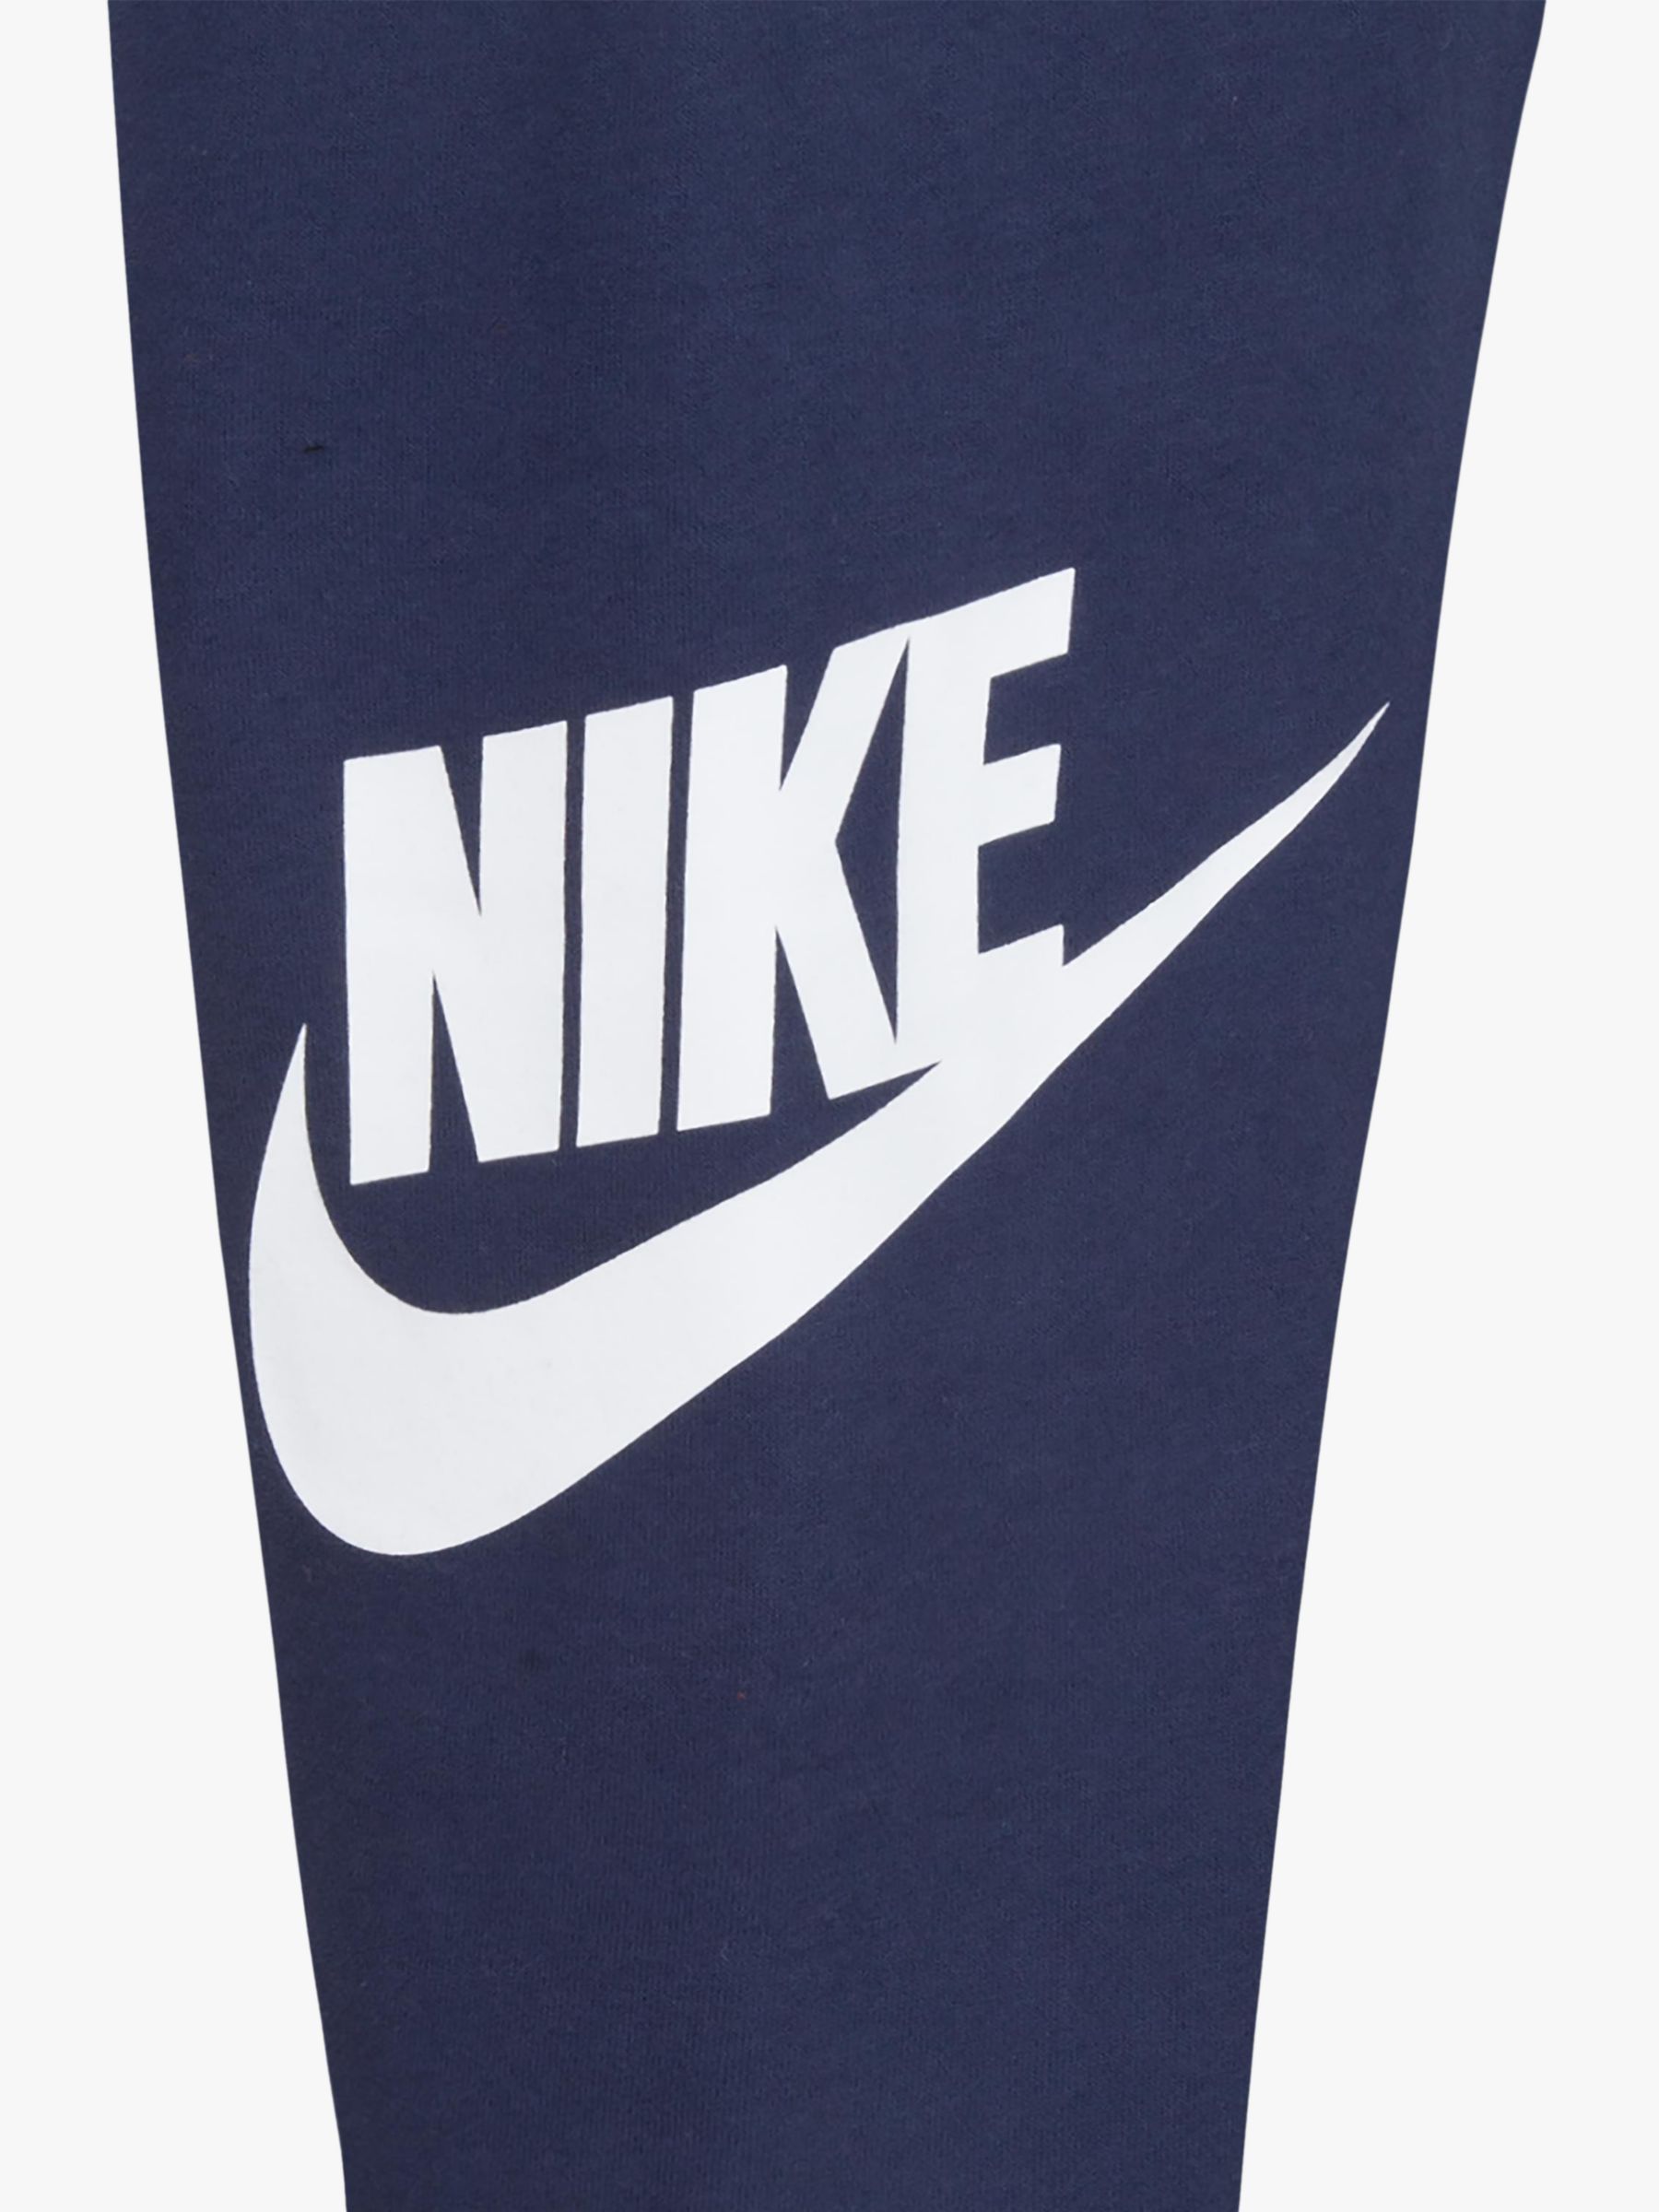 Nike Kids' Logo Tracksuit, Navy